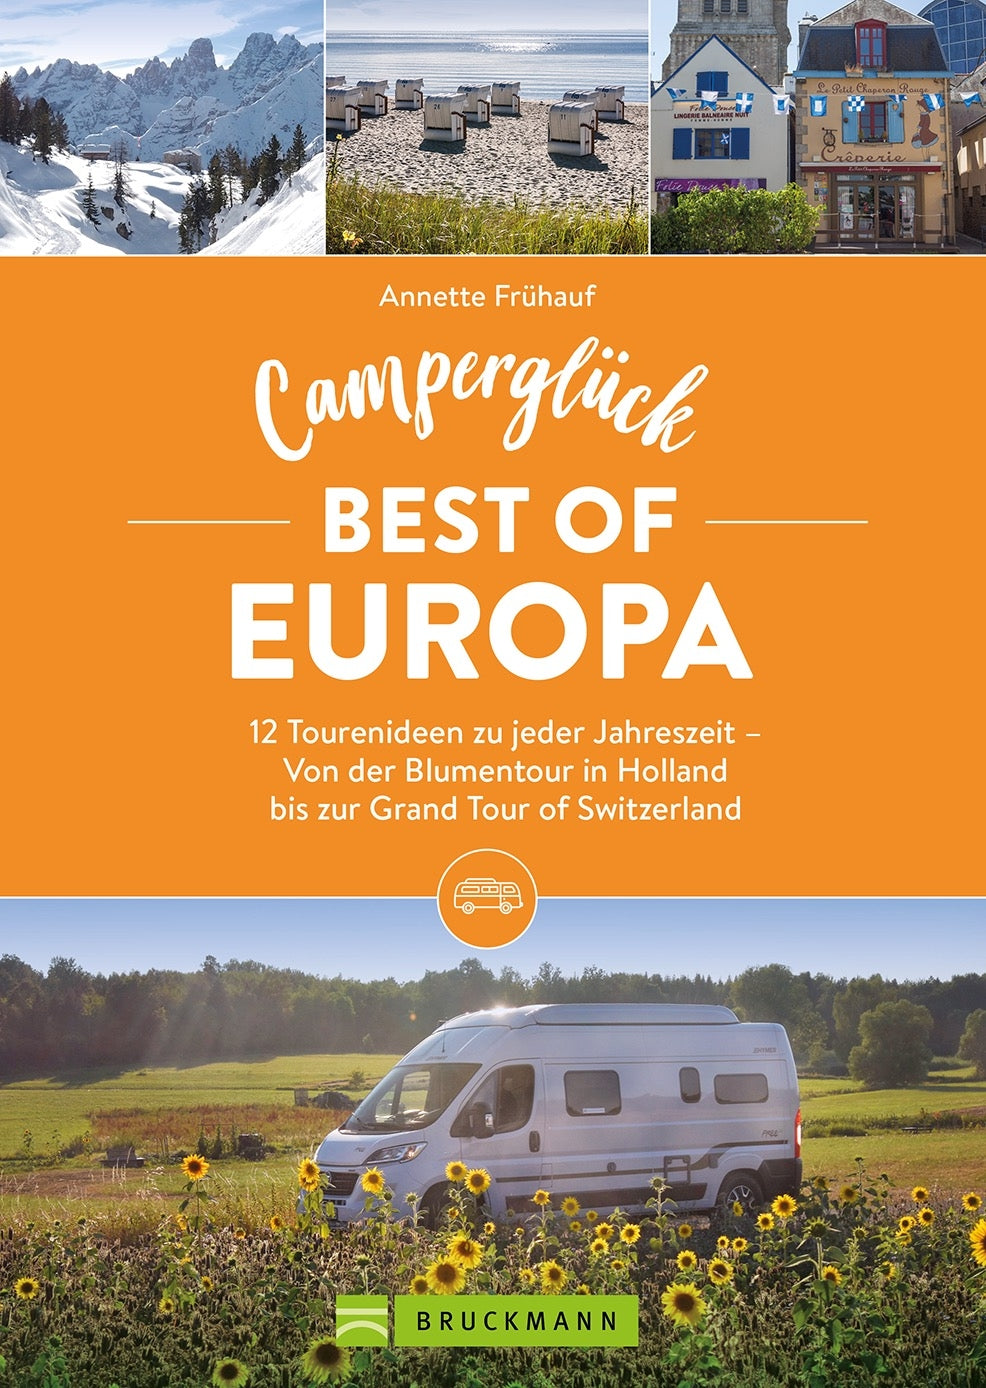 Best of Europa - Camperglück - Bruckmann Verlag